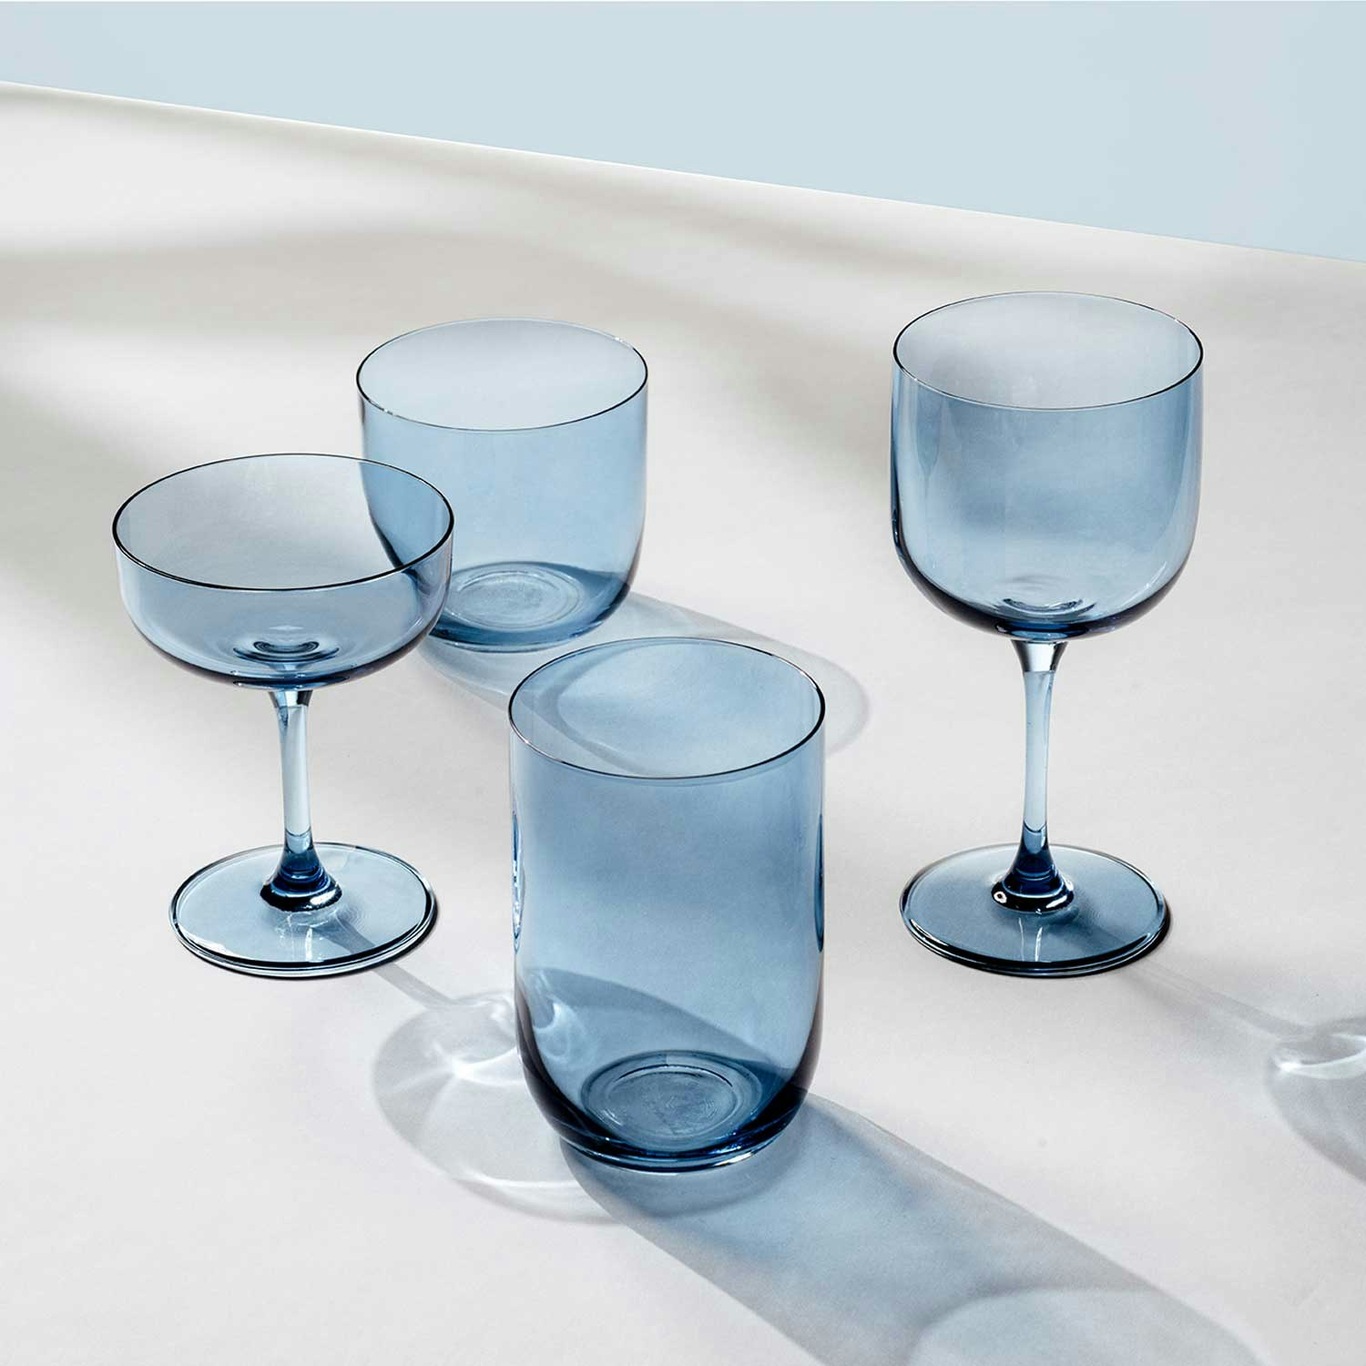 https://royaldesign.com/image/2/villeroy-boch-like-wine-glasses-2-pack-56?w=800&quality=80